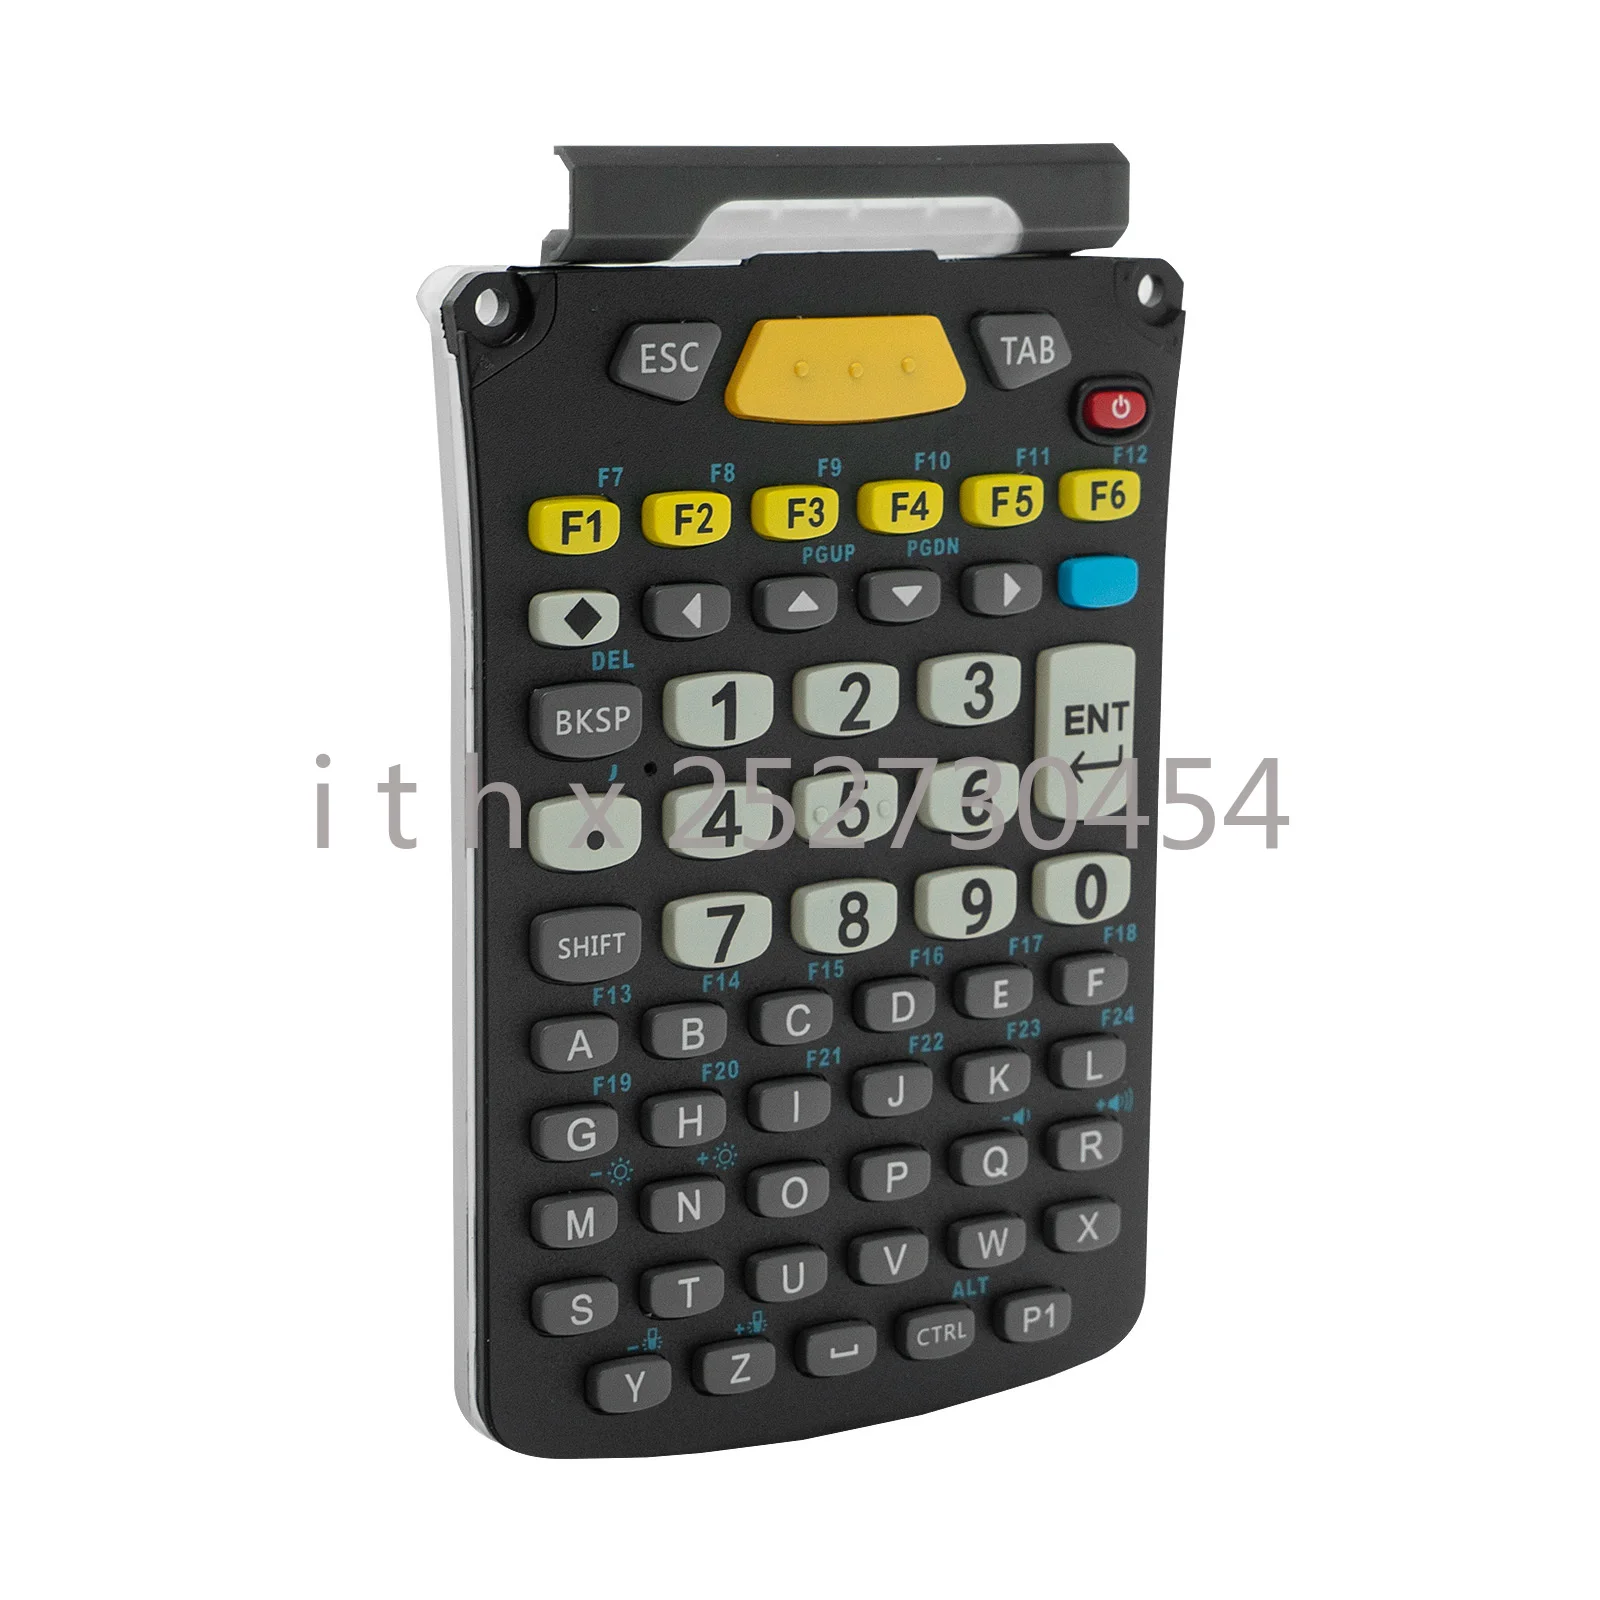 

MC9300 MC930B-G 58-Keys Standard Keypad for Motorola Zebra Symbol Mobile Terminal